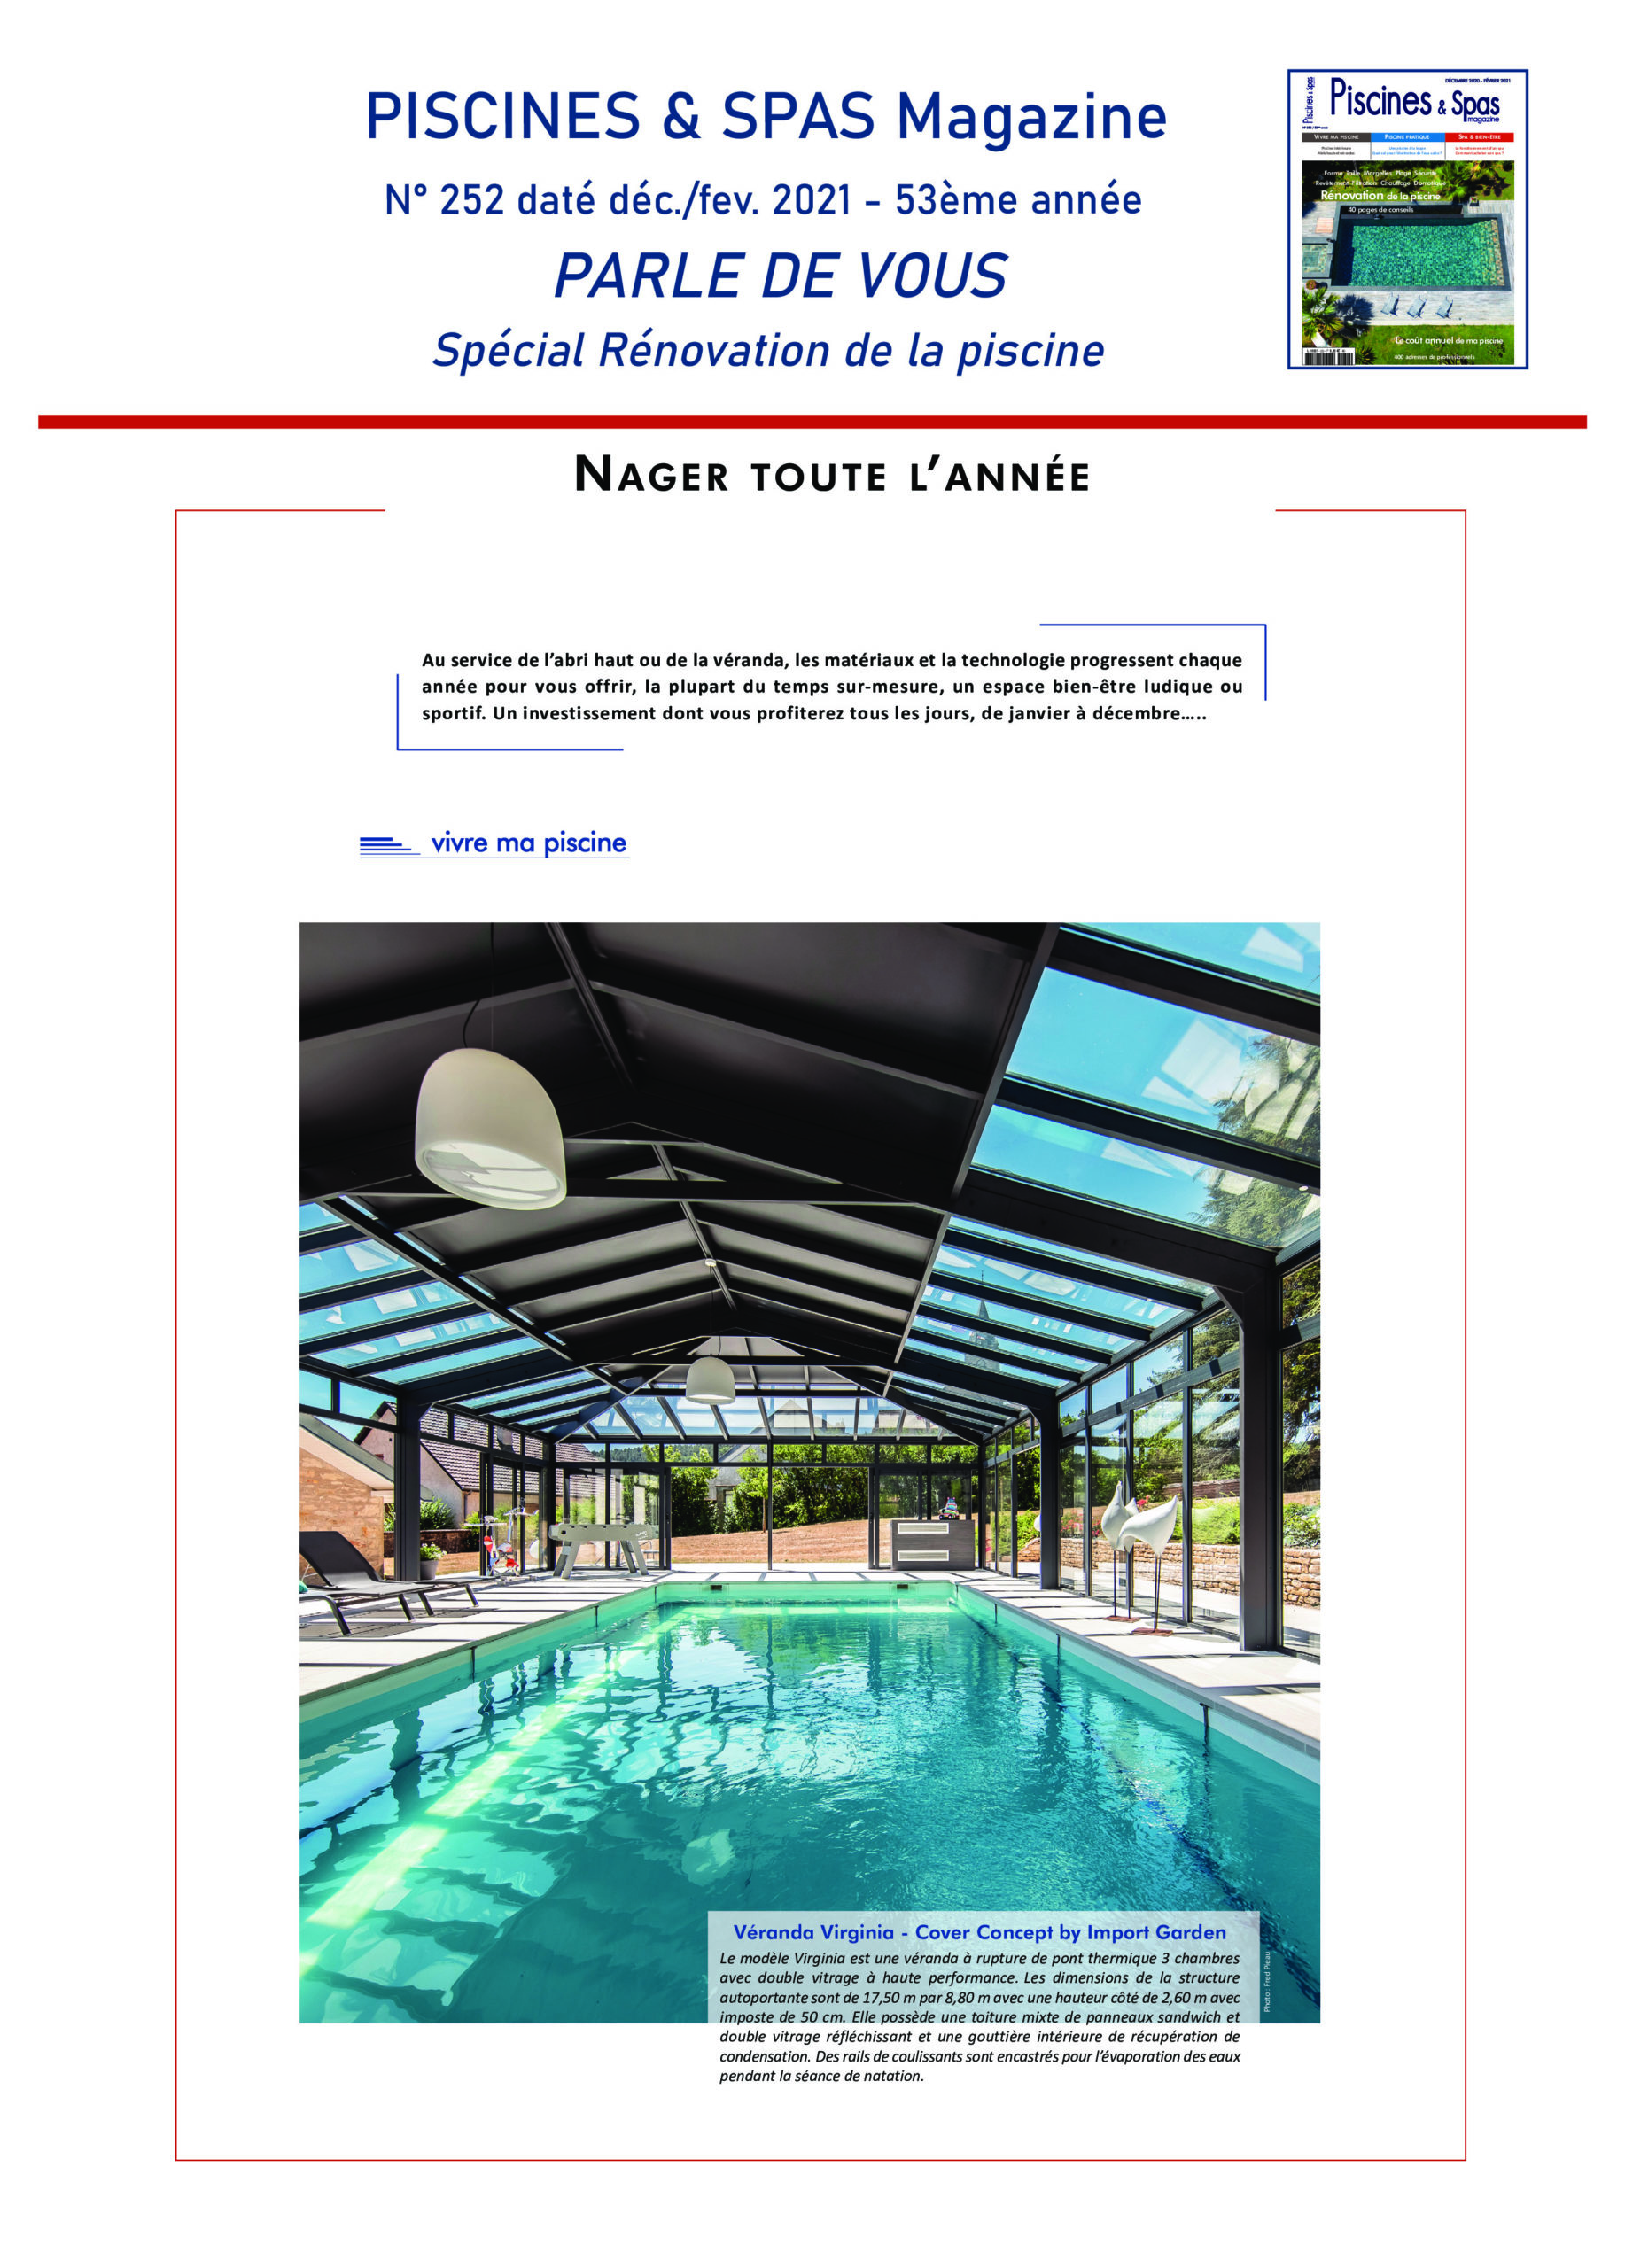 Cover Concept by Import Garden dans Piscines et Spas magazine n°252